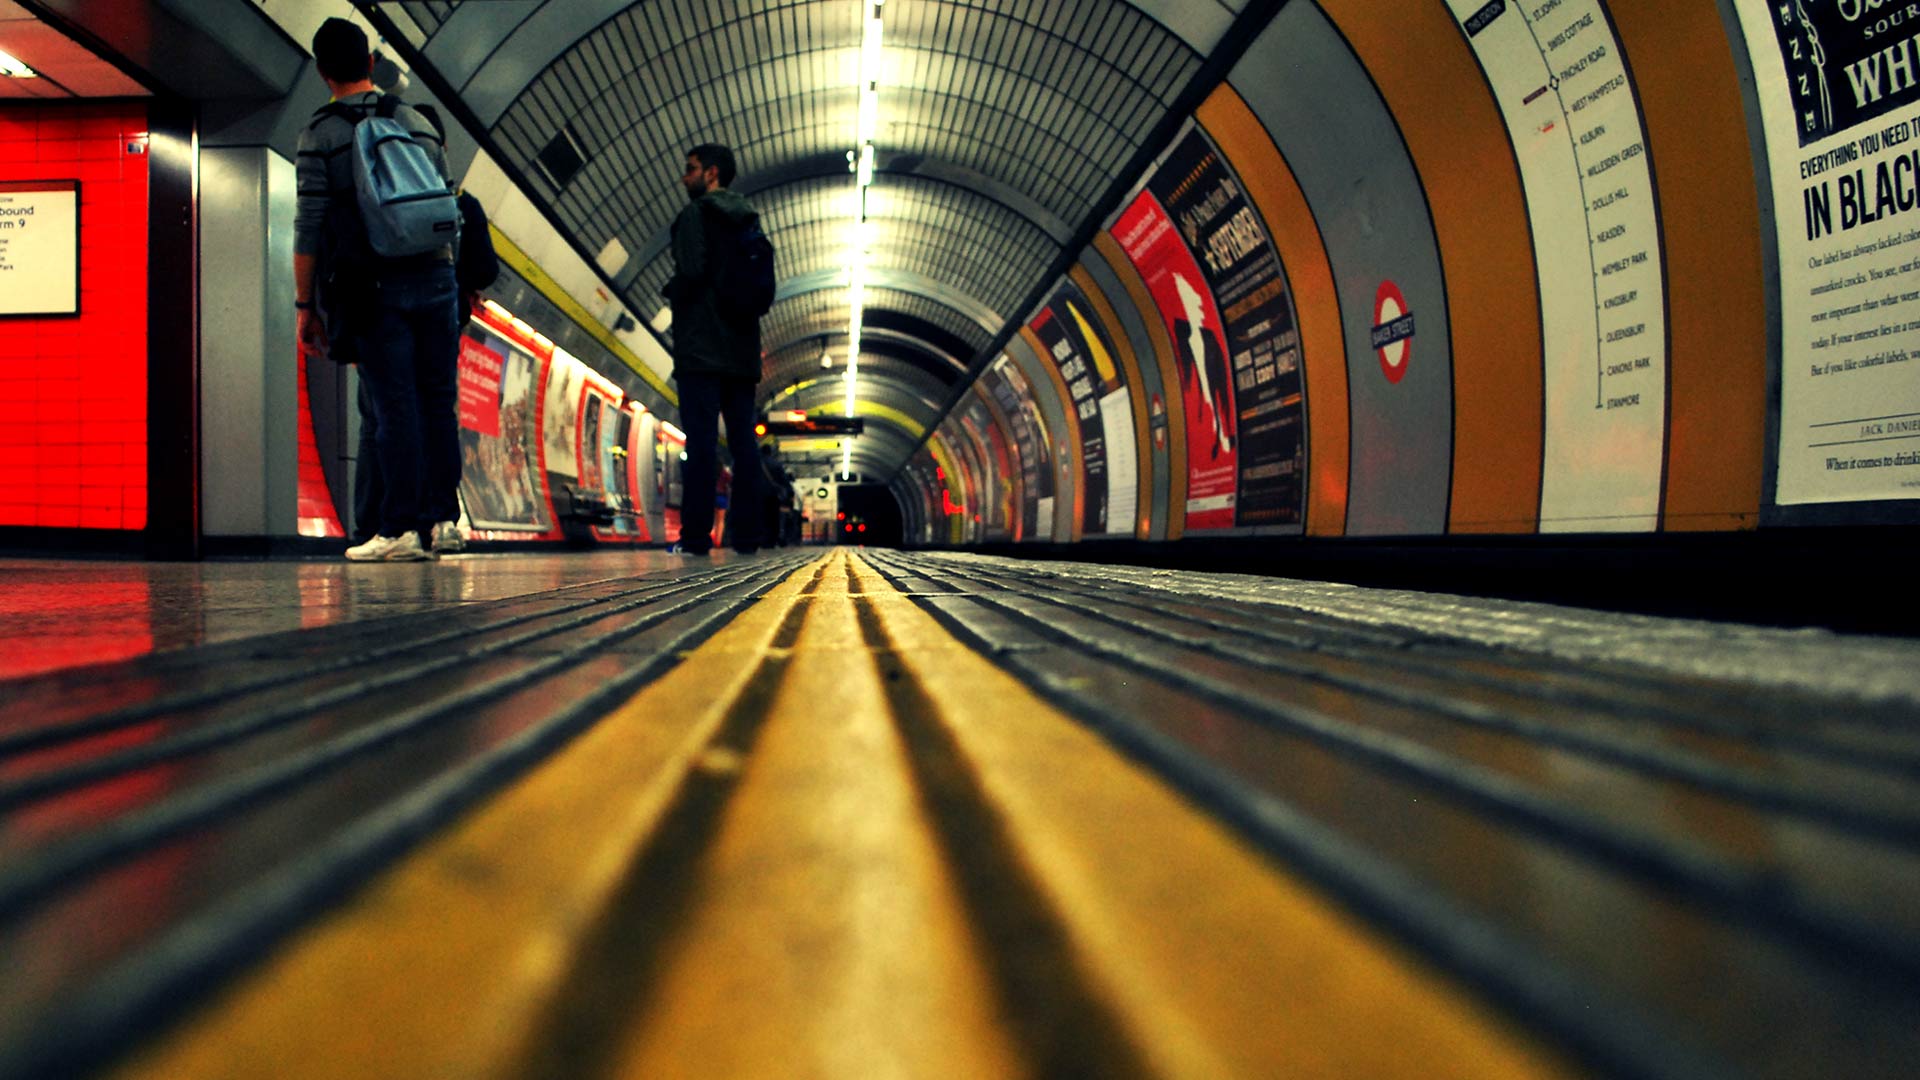 London Underground Wallpaper Full HD For 1080p